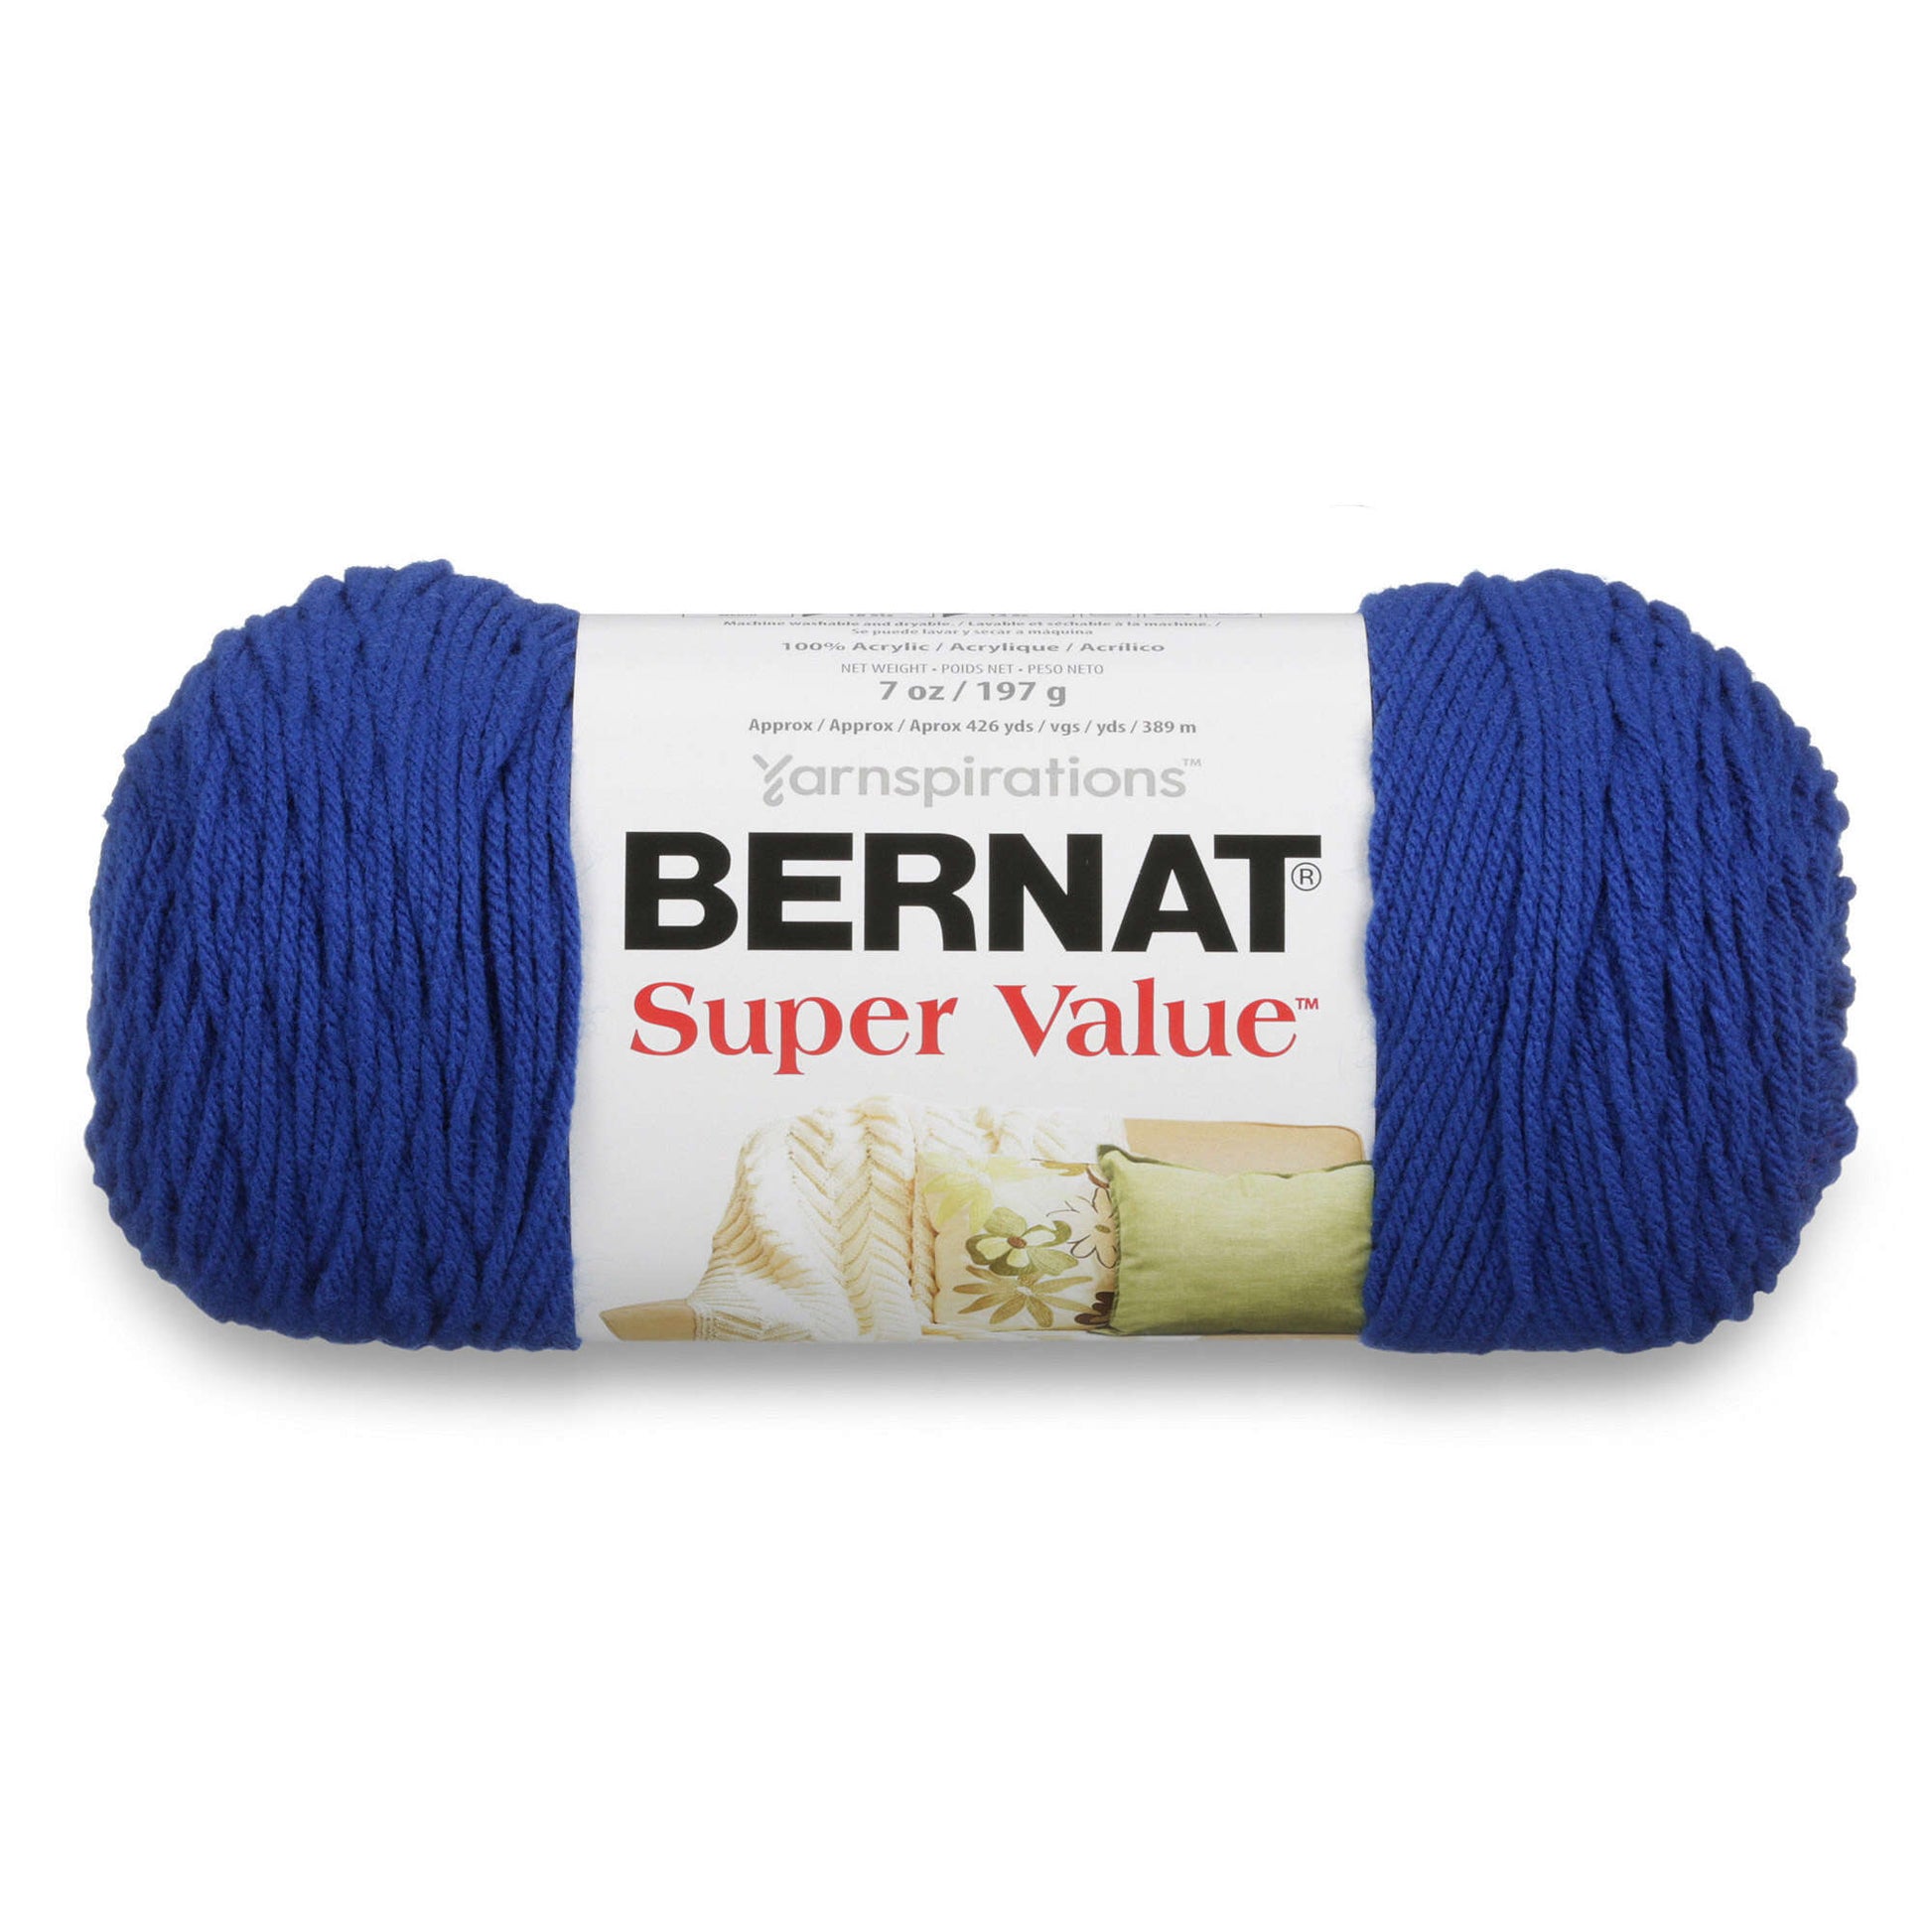 Bernat Super Value Yarn Royal Blue